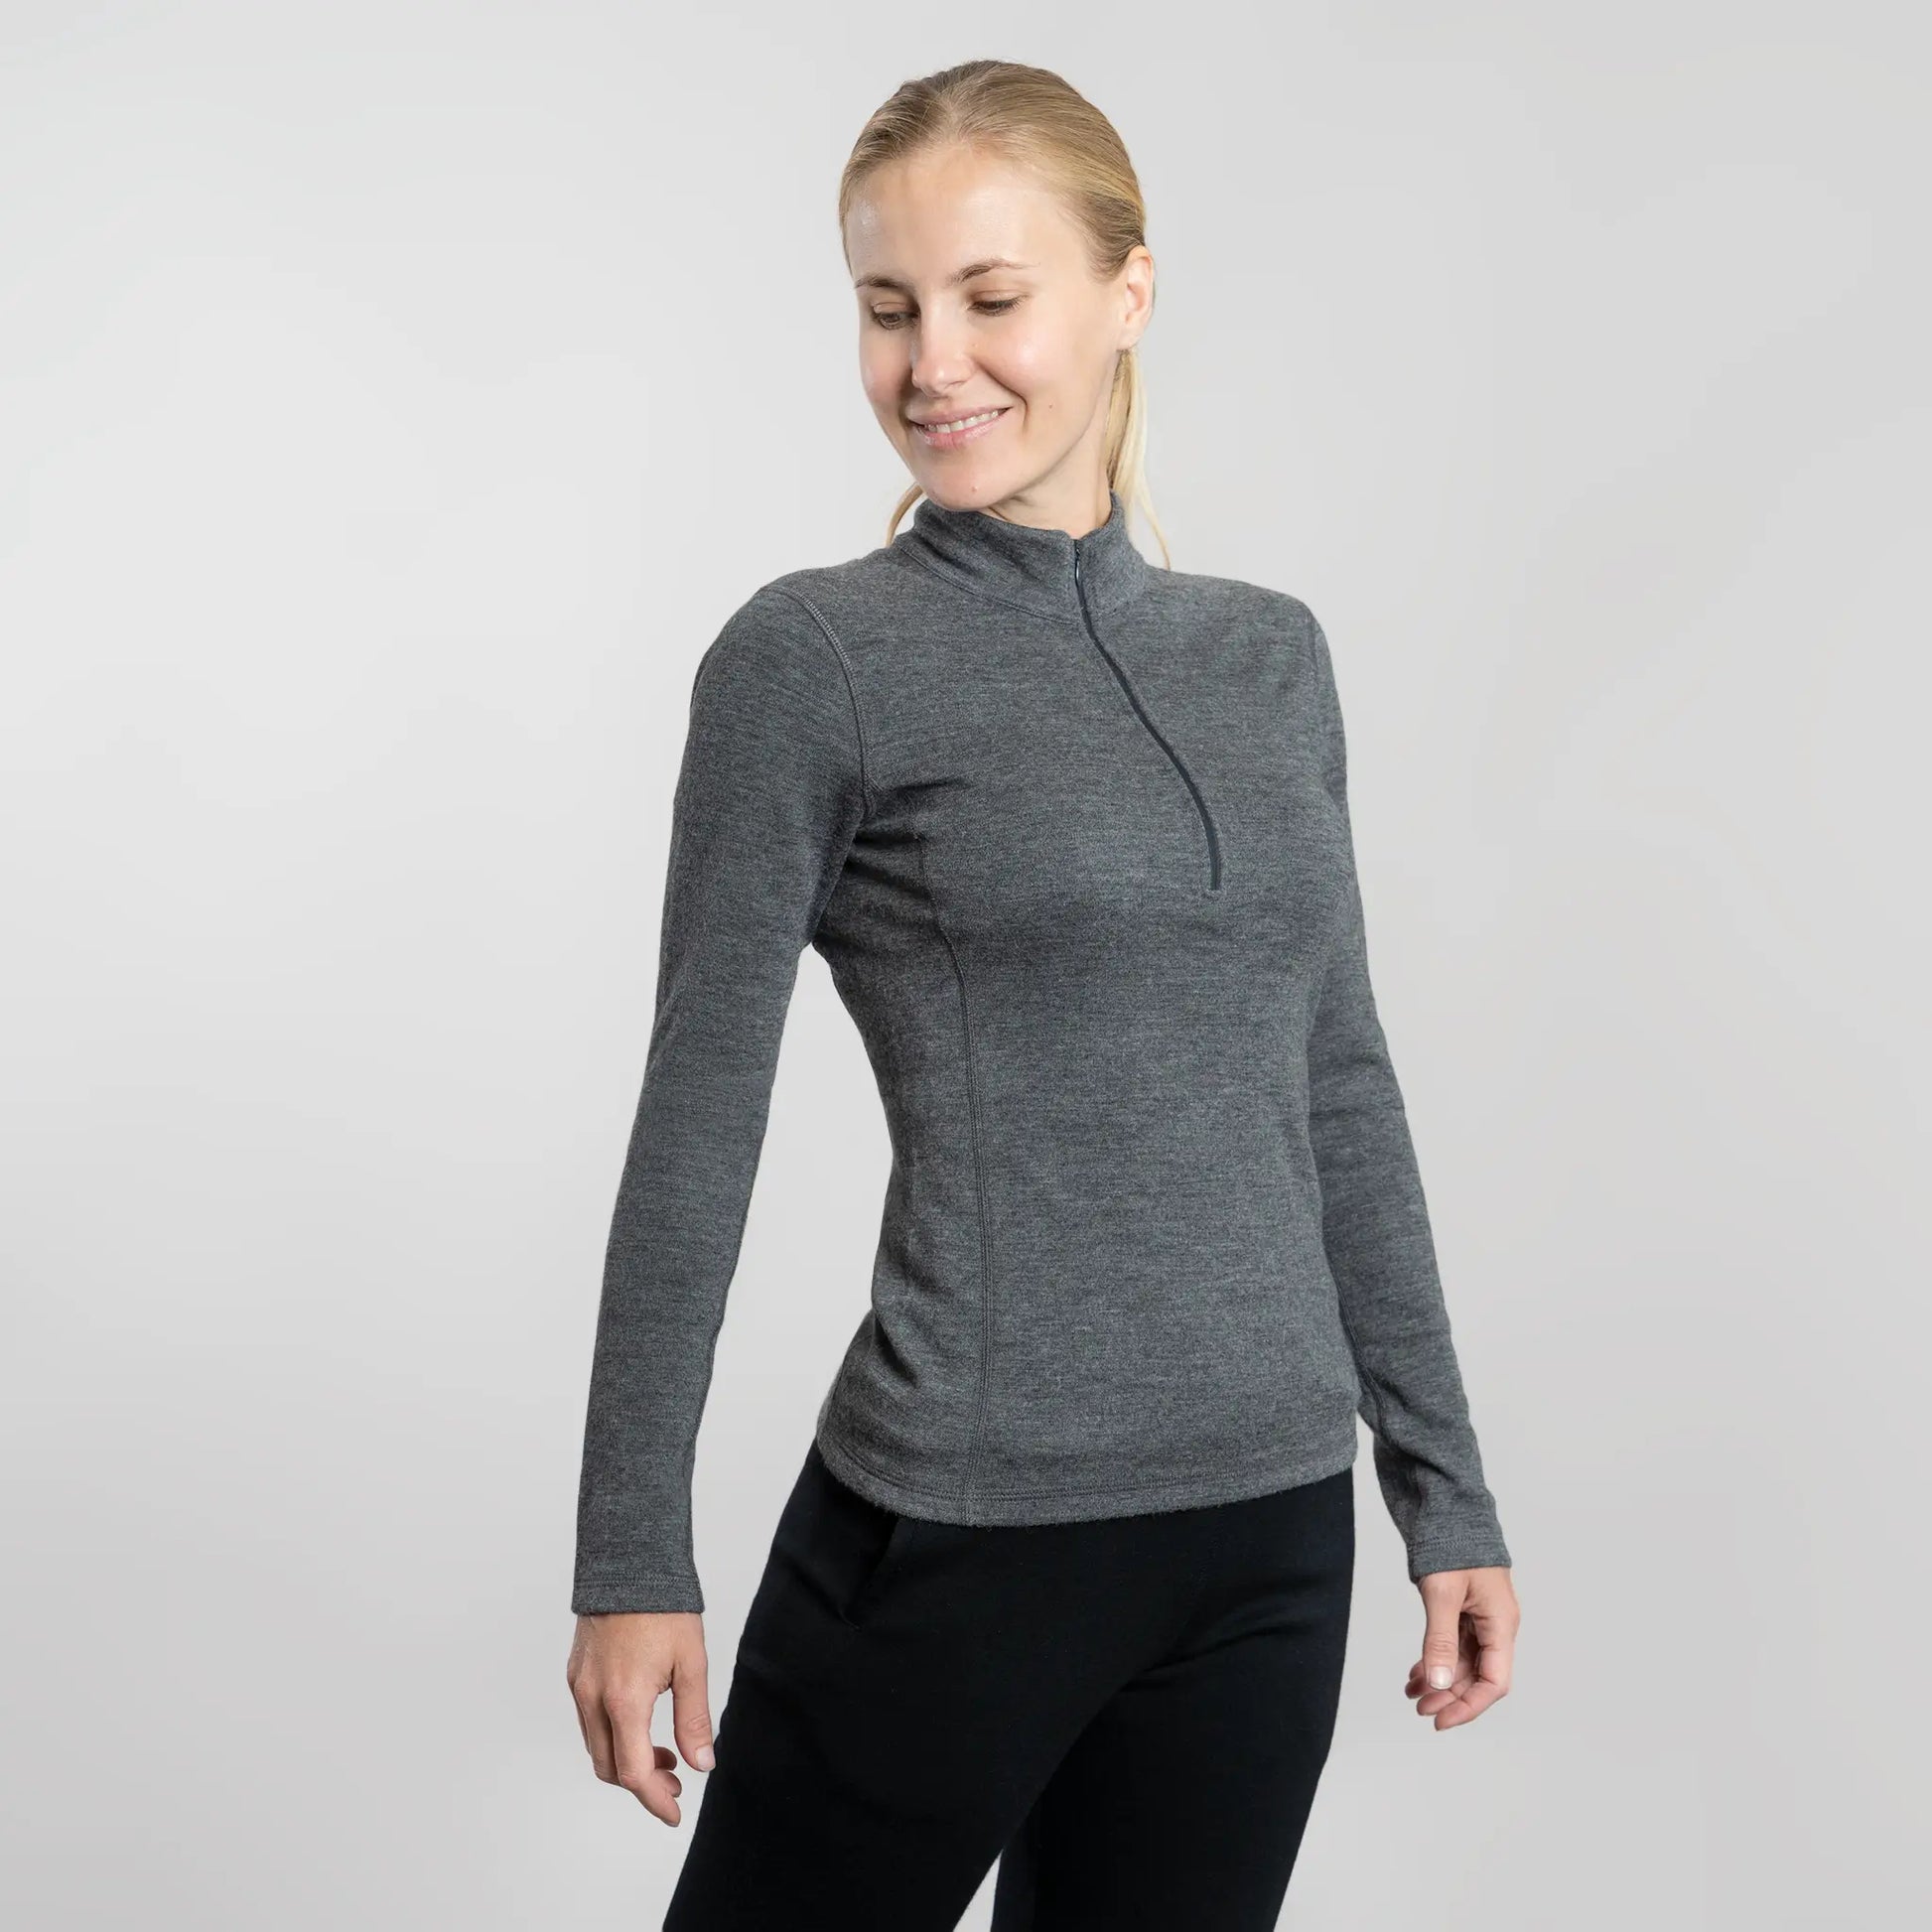 Women's Alpaca Wool Half-Zip Base Layer: Lightweight